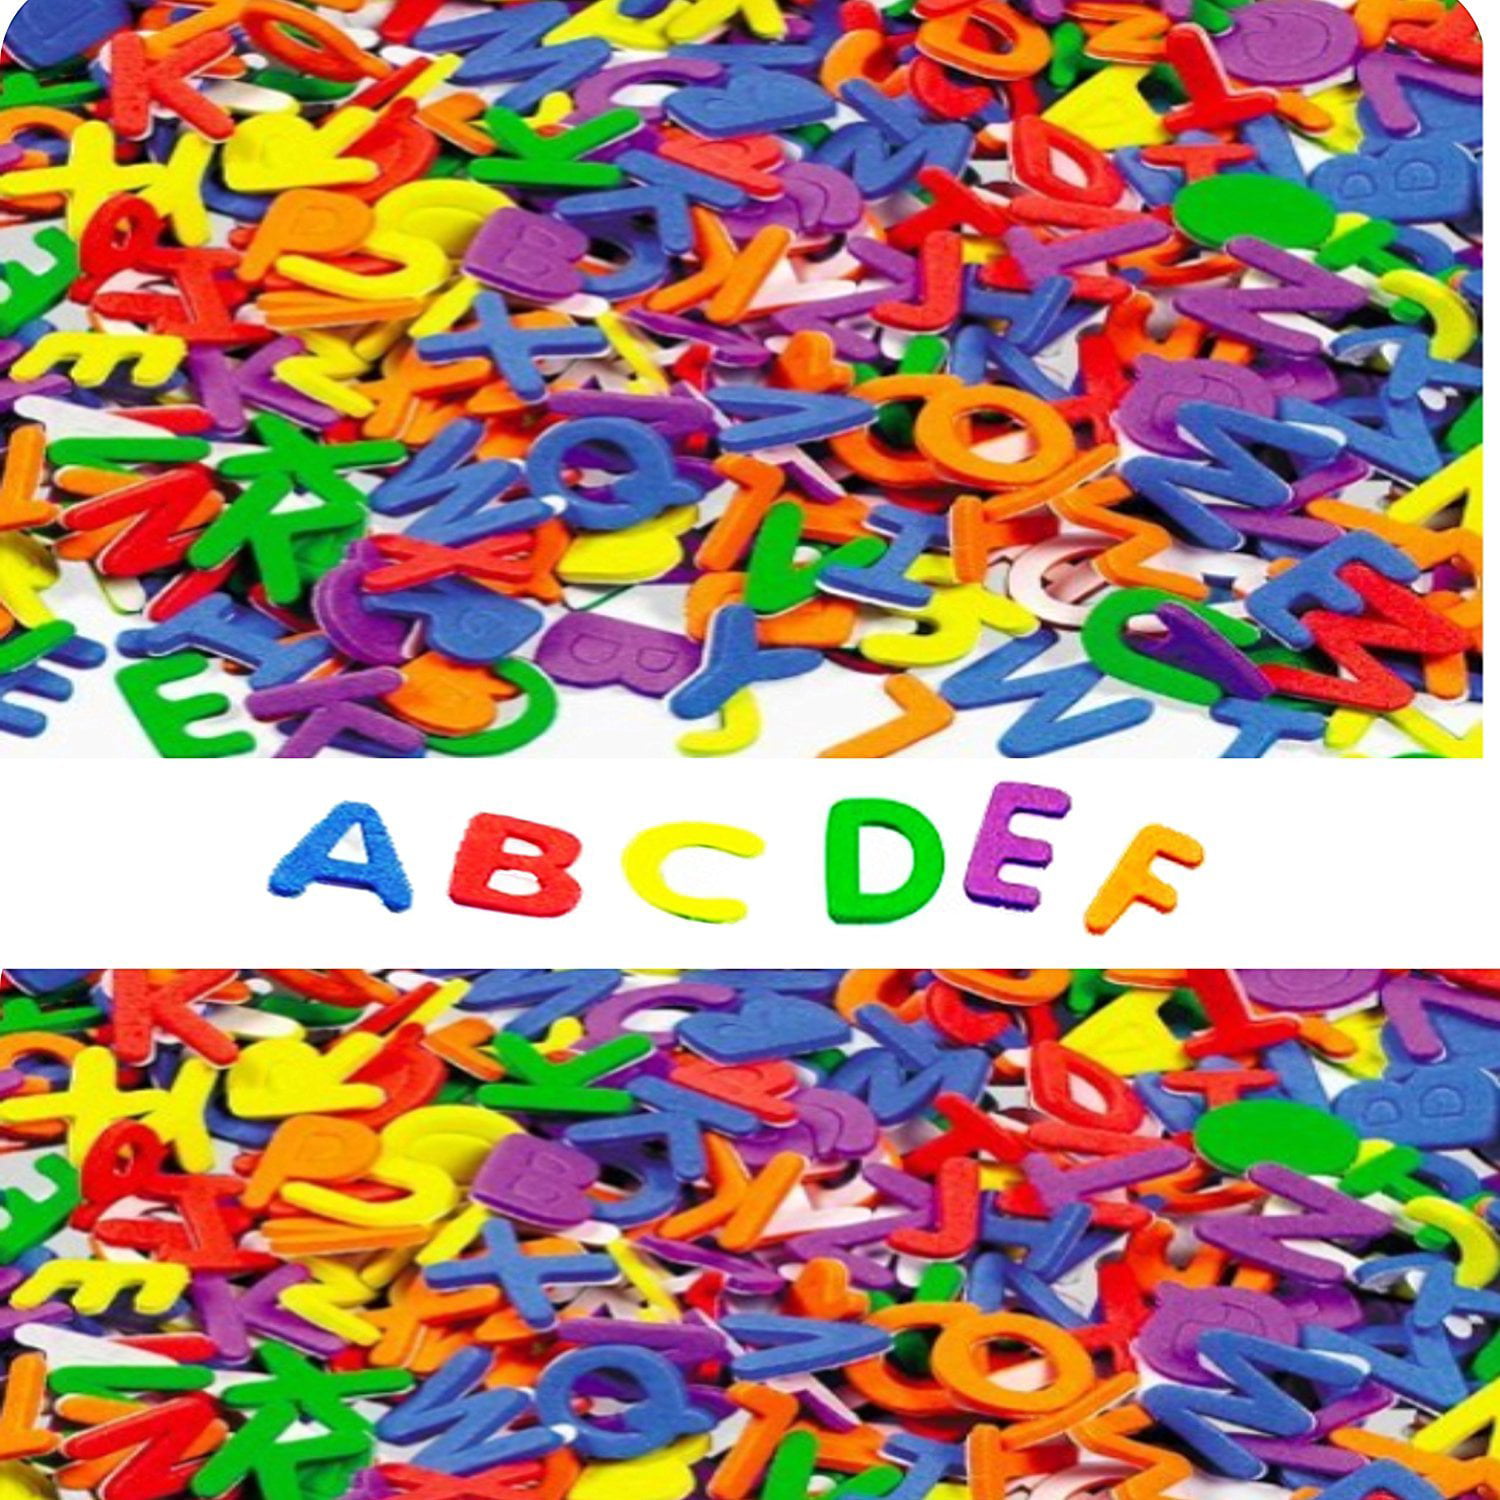 play-kreative-self-adhesive-foam-letters-1040-pcs-assorted-colors-walmart